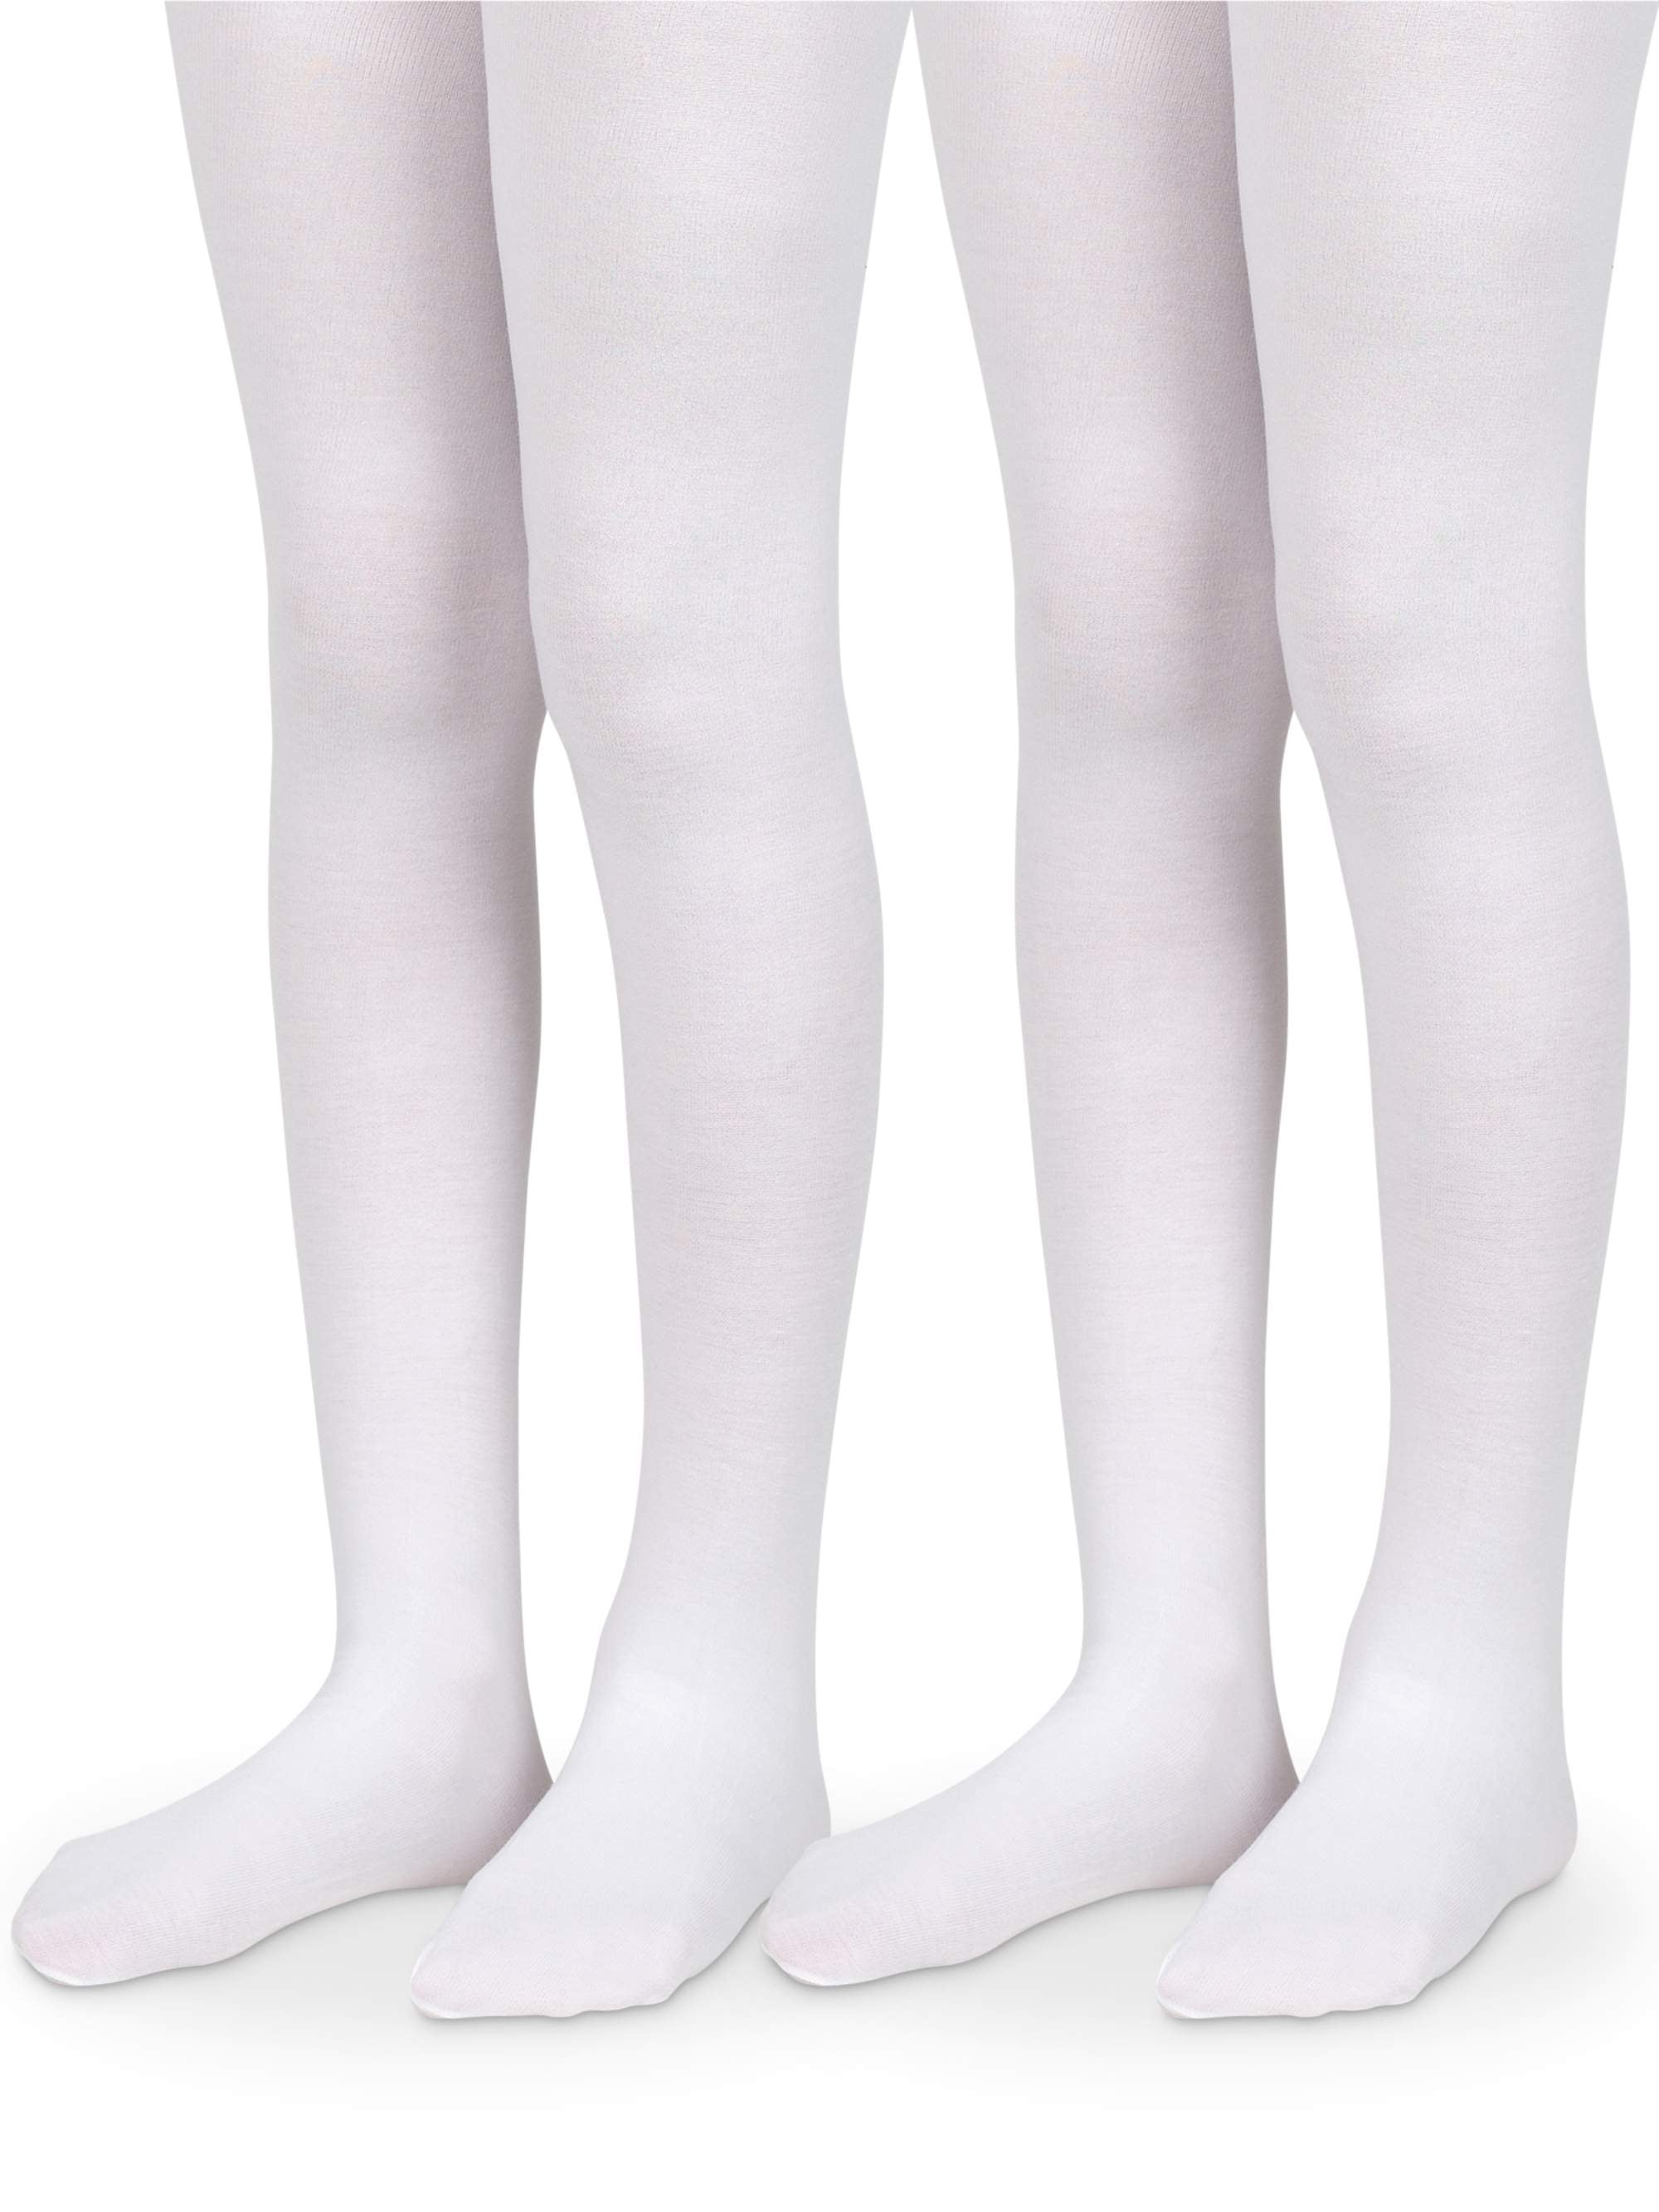 Jefferies Socks Girls School Uniform Cable and Rib Tight 2 Pack 